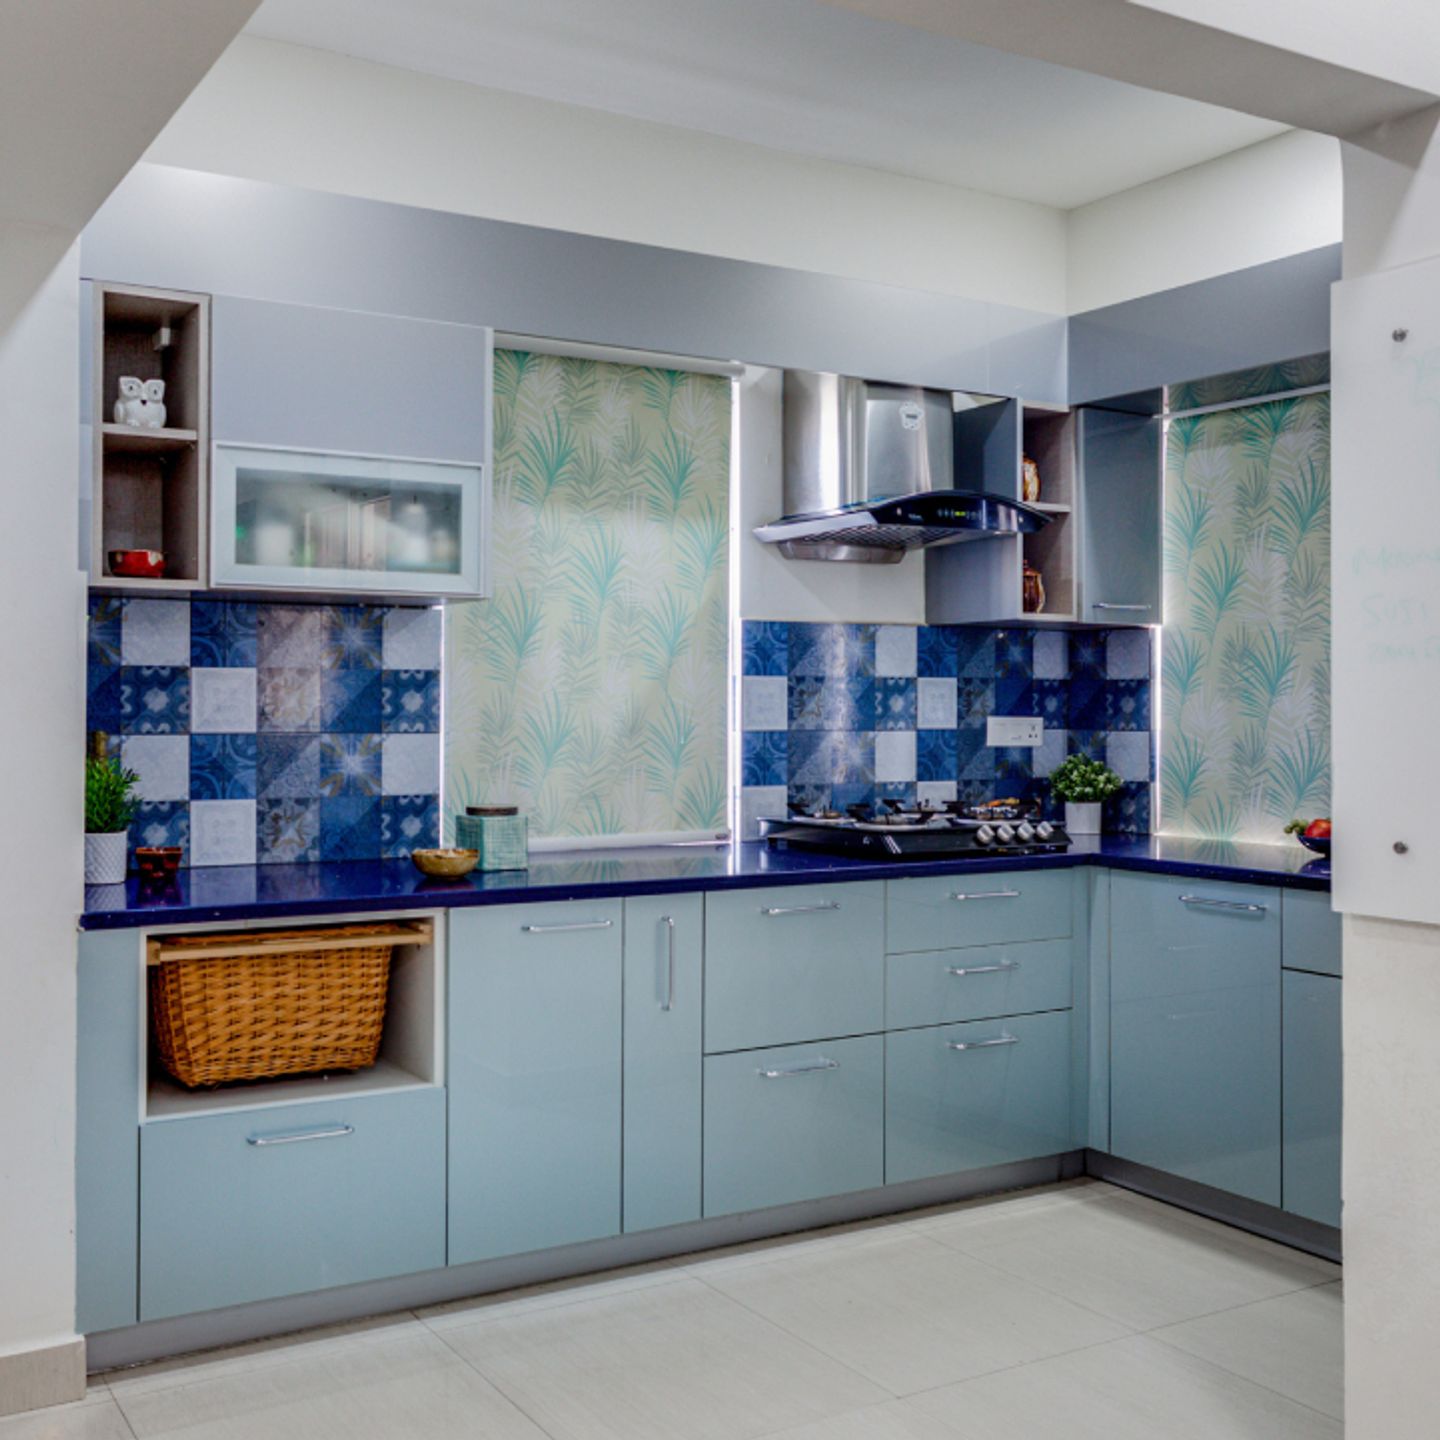 Open Kitchen Design For Rental Homes - Livspace